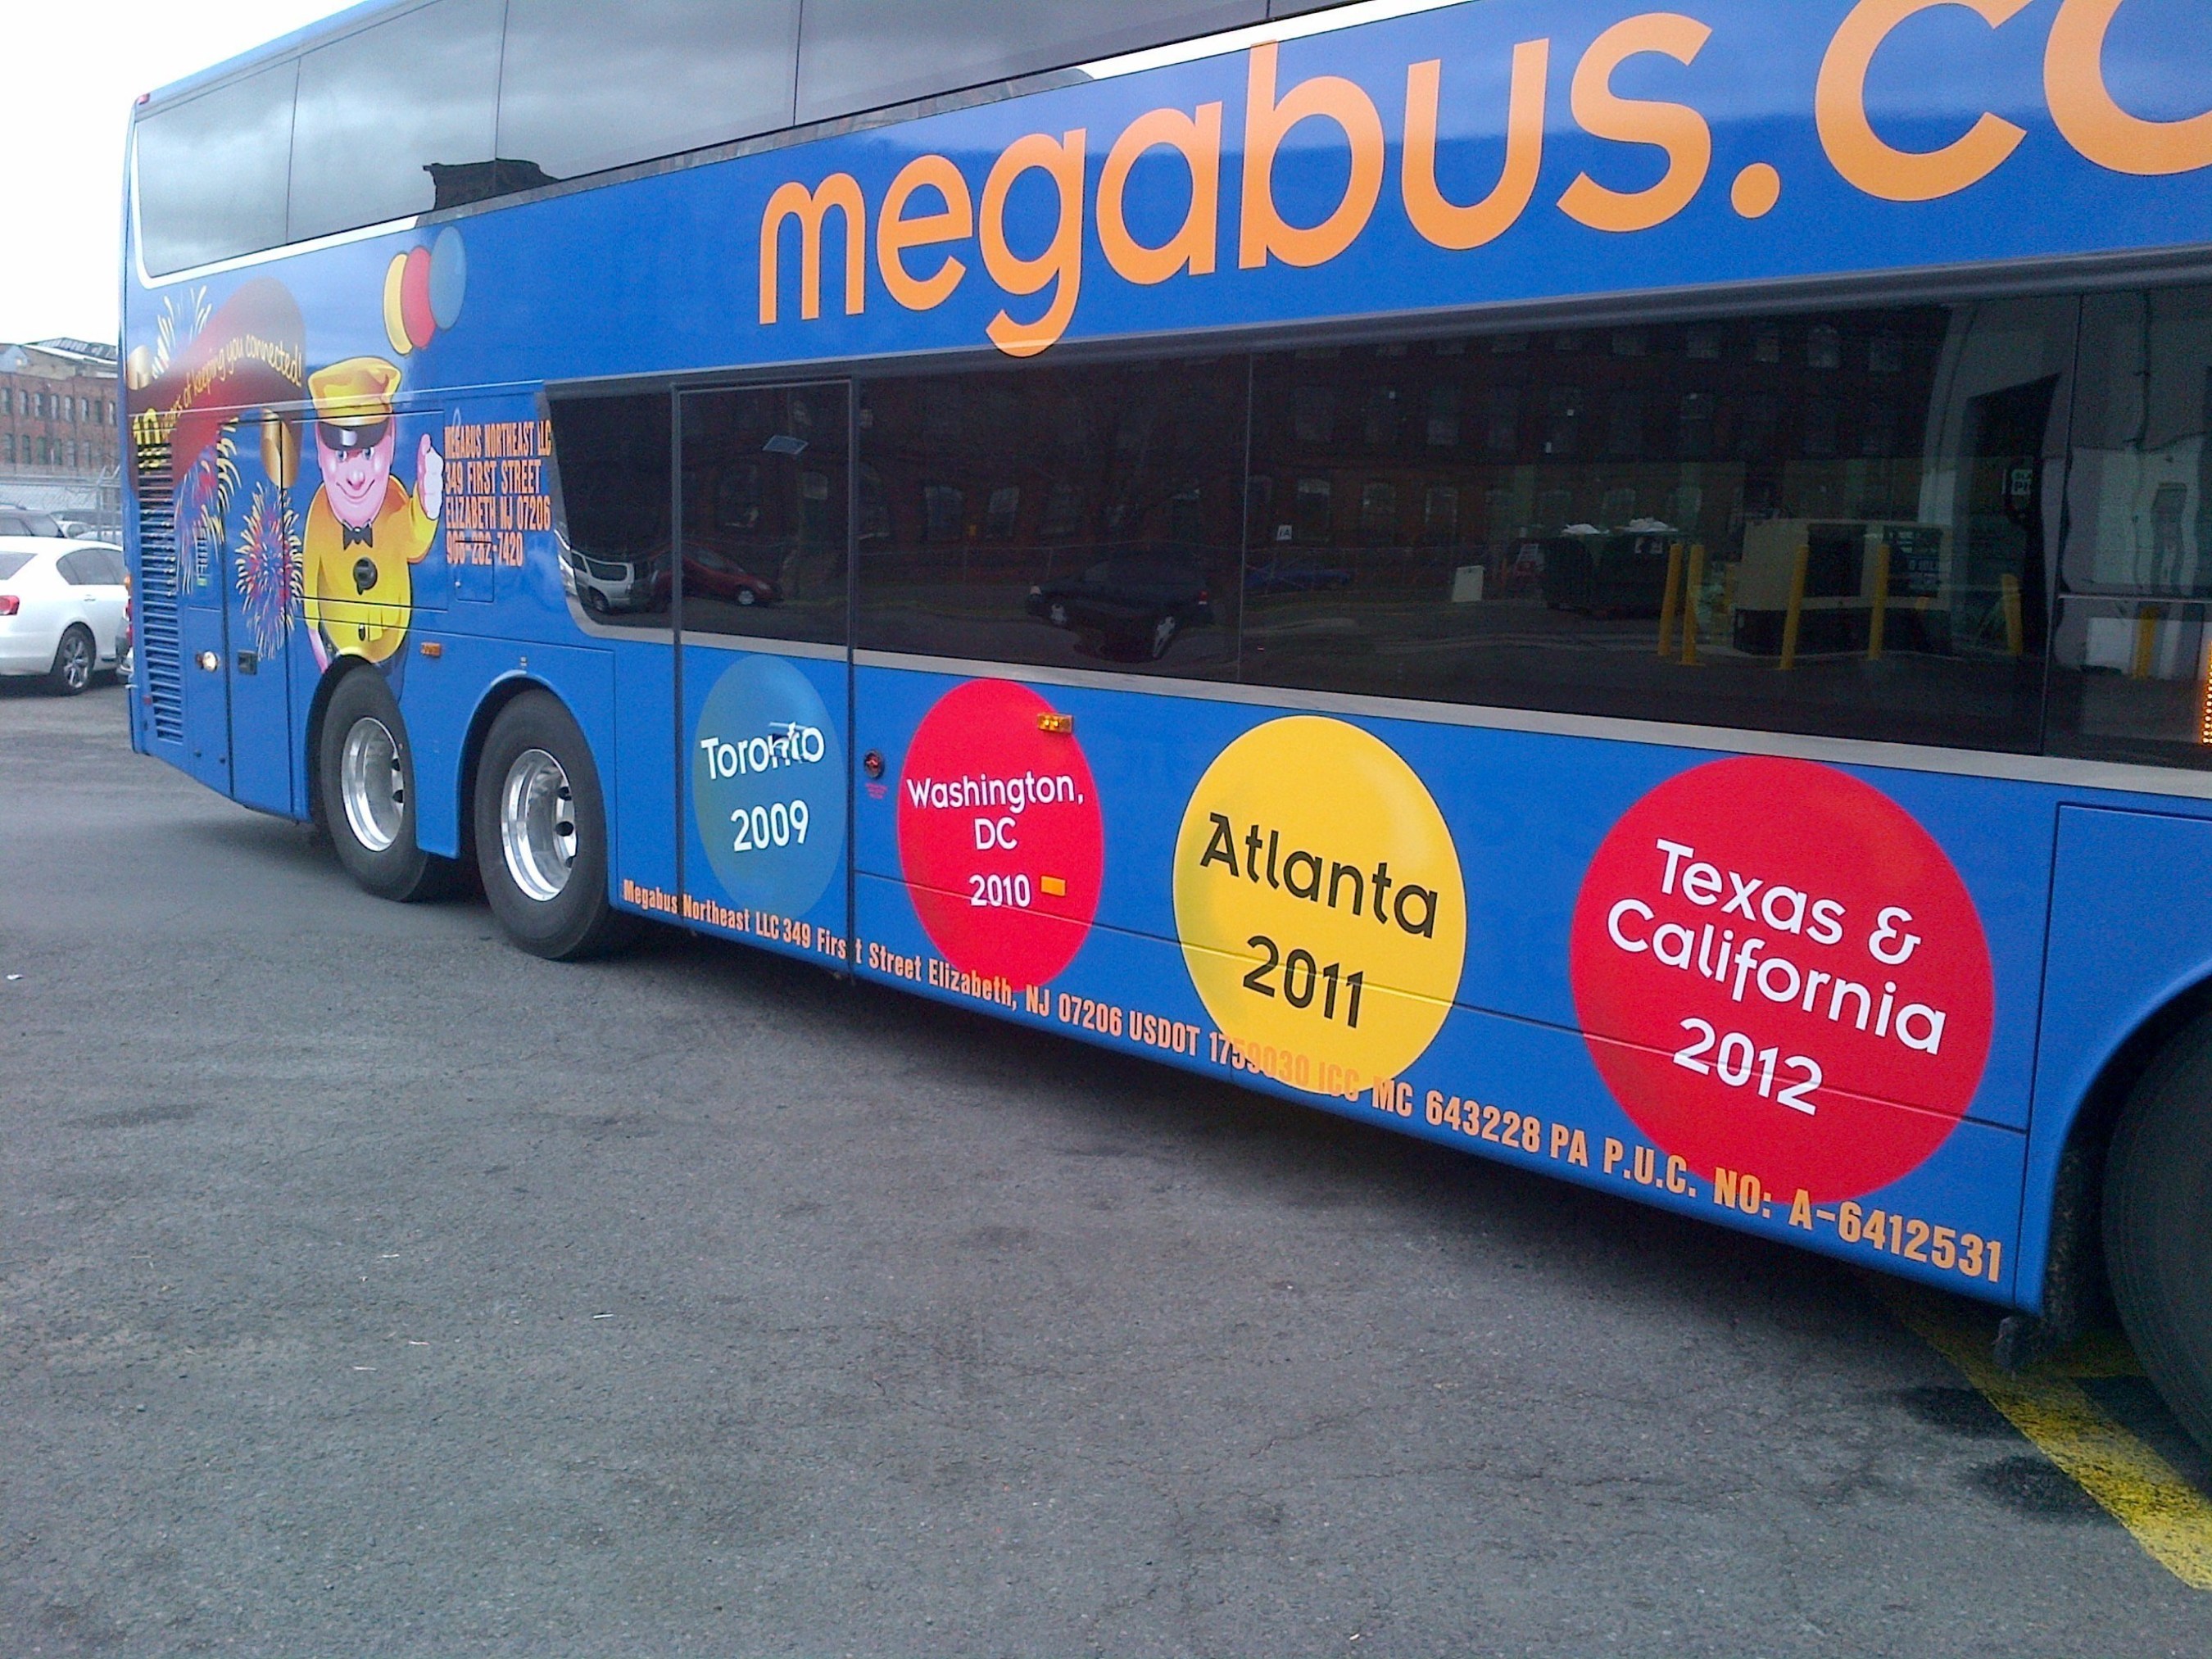 megabus.com Celebrates 10 Years of Ecofriendly Travel in the U.S.